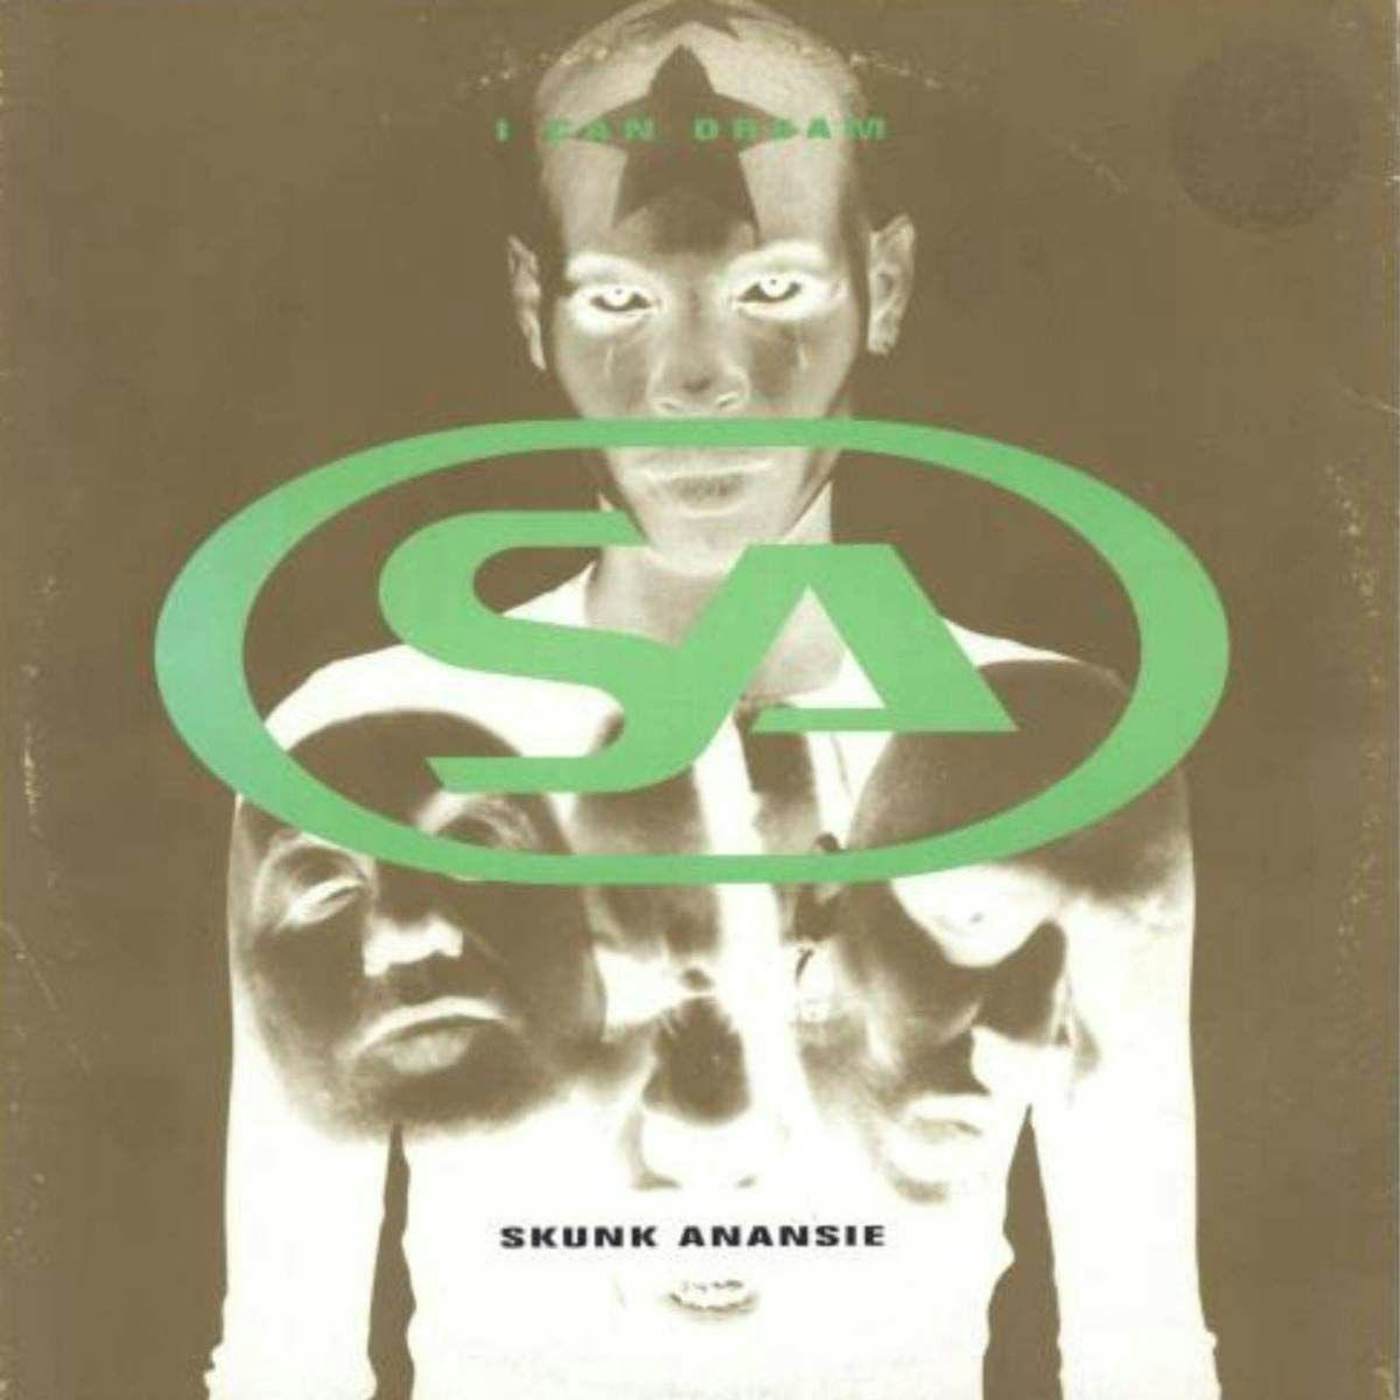 Skunk Anansie I Can Dream Vinyl Record